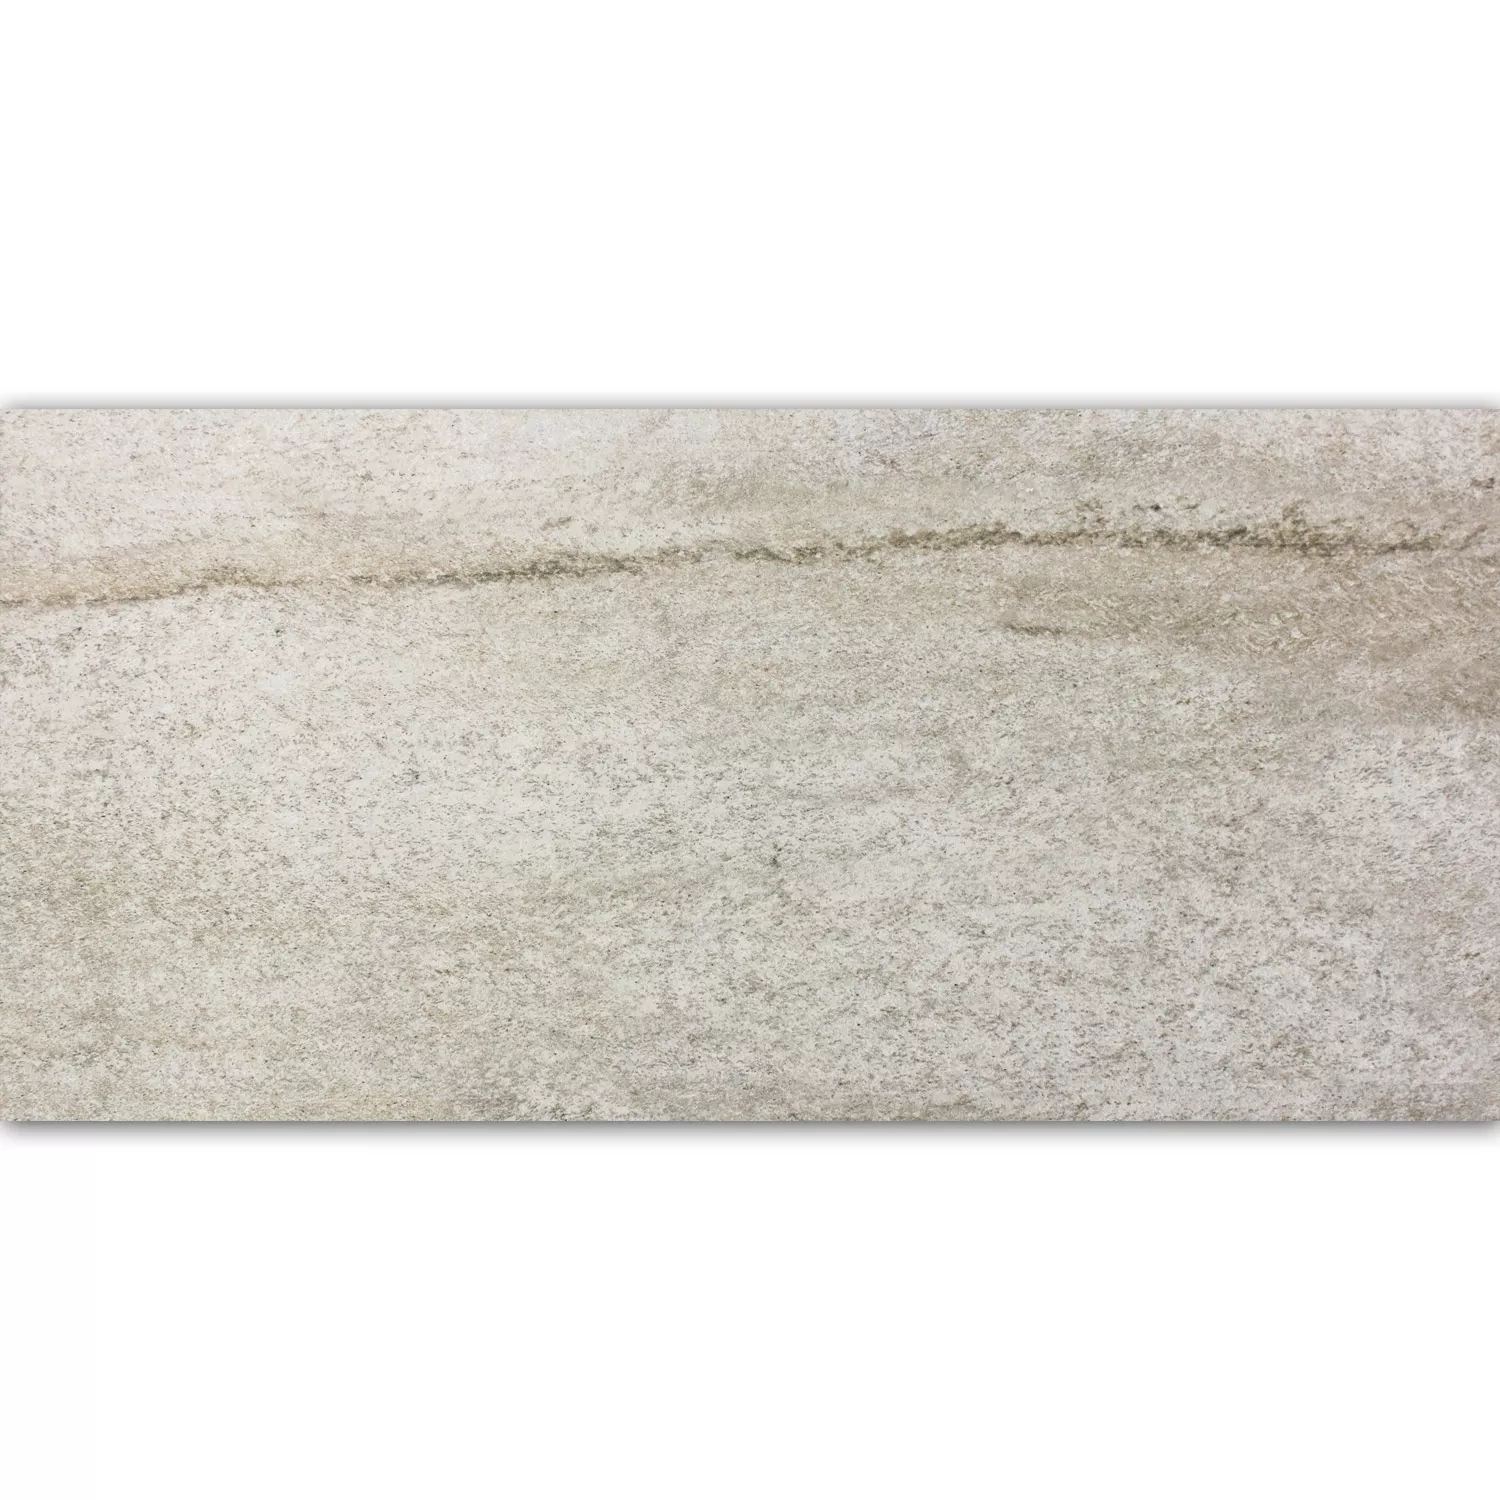 Vzorek Podlahové Dlaždice Natural Grey 31x62cm